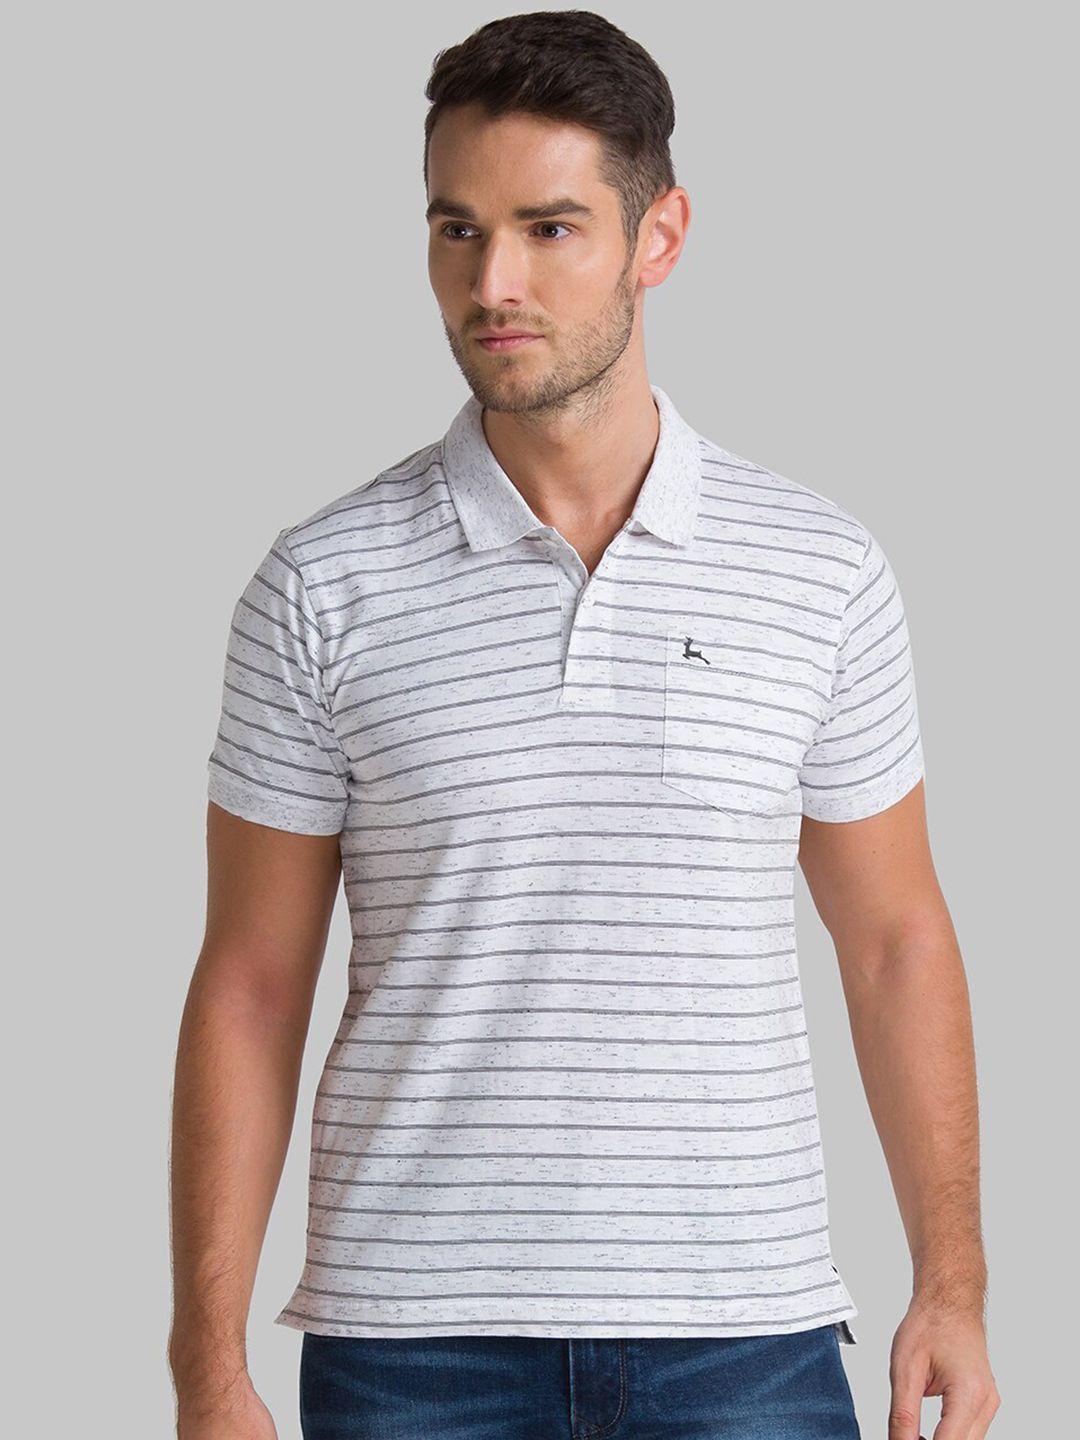 parx-men-white-striped-polo-collar-t-shirt